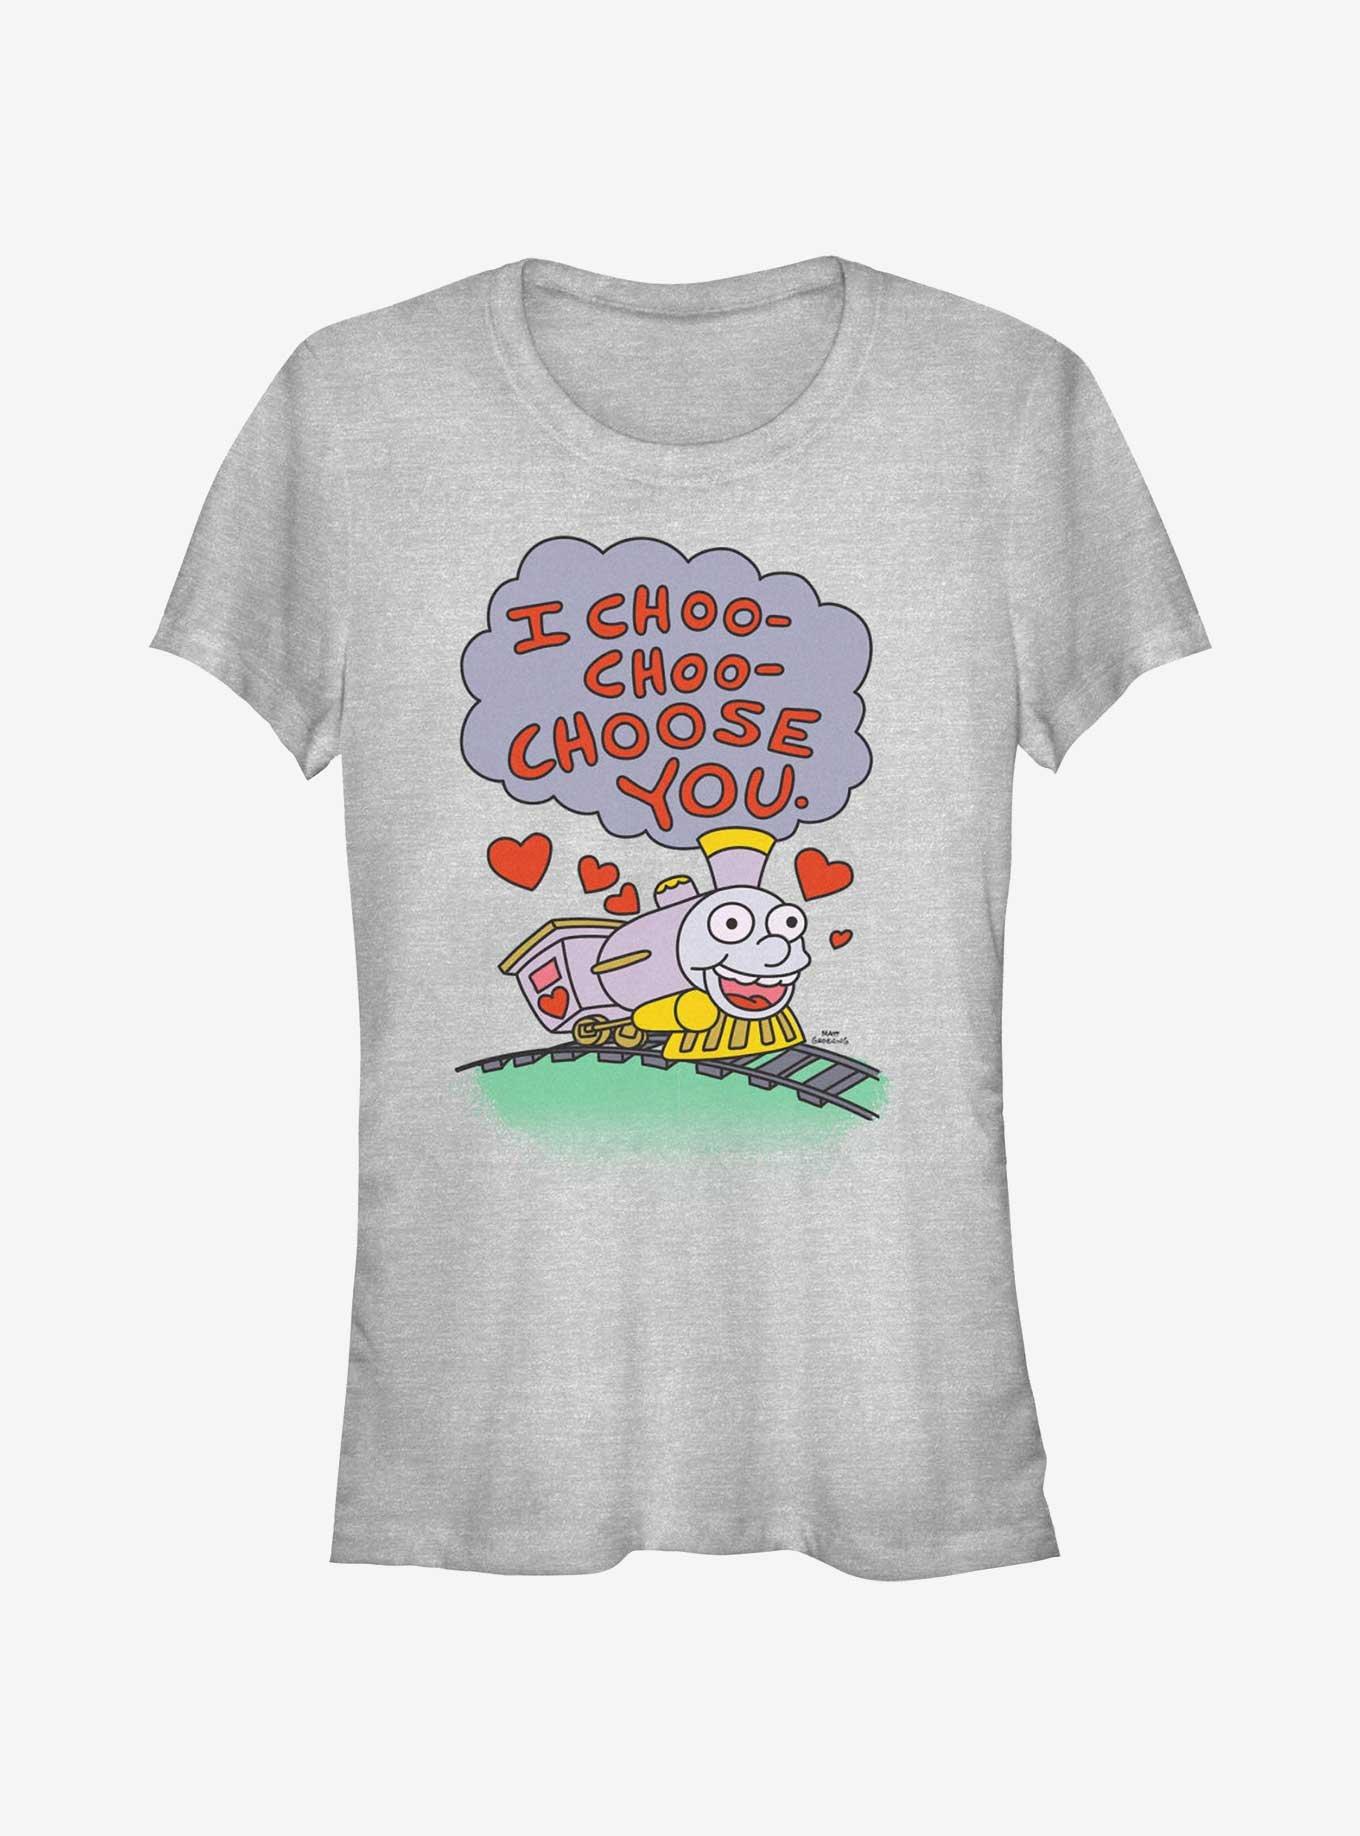 Simpsons Choo-Choose You Girls T-Shirt